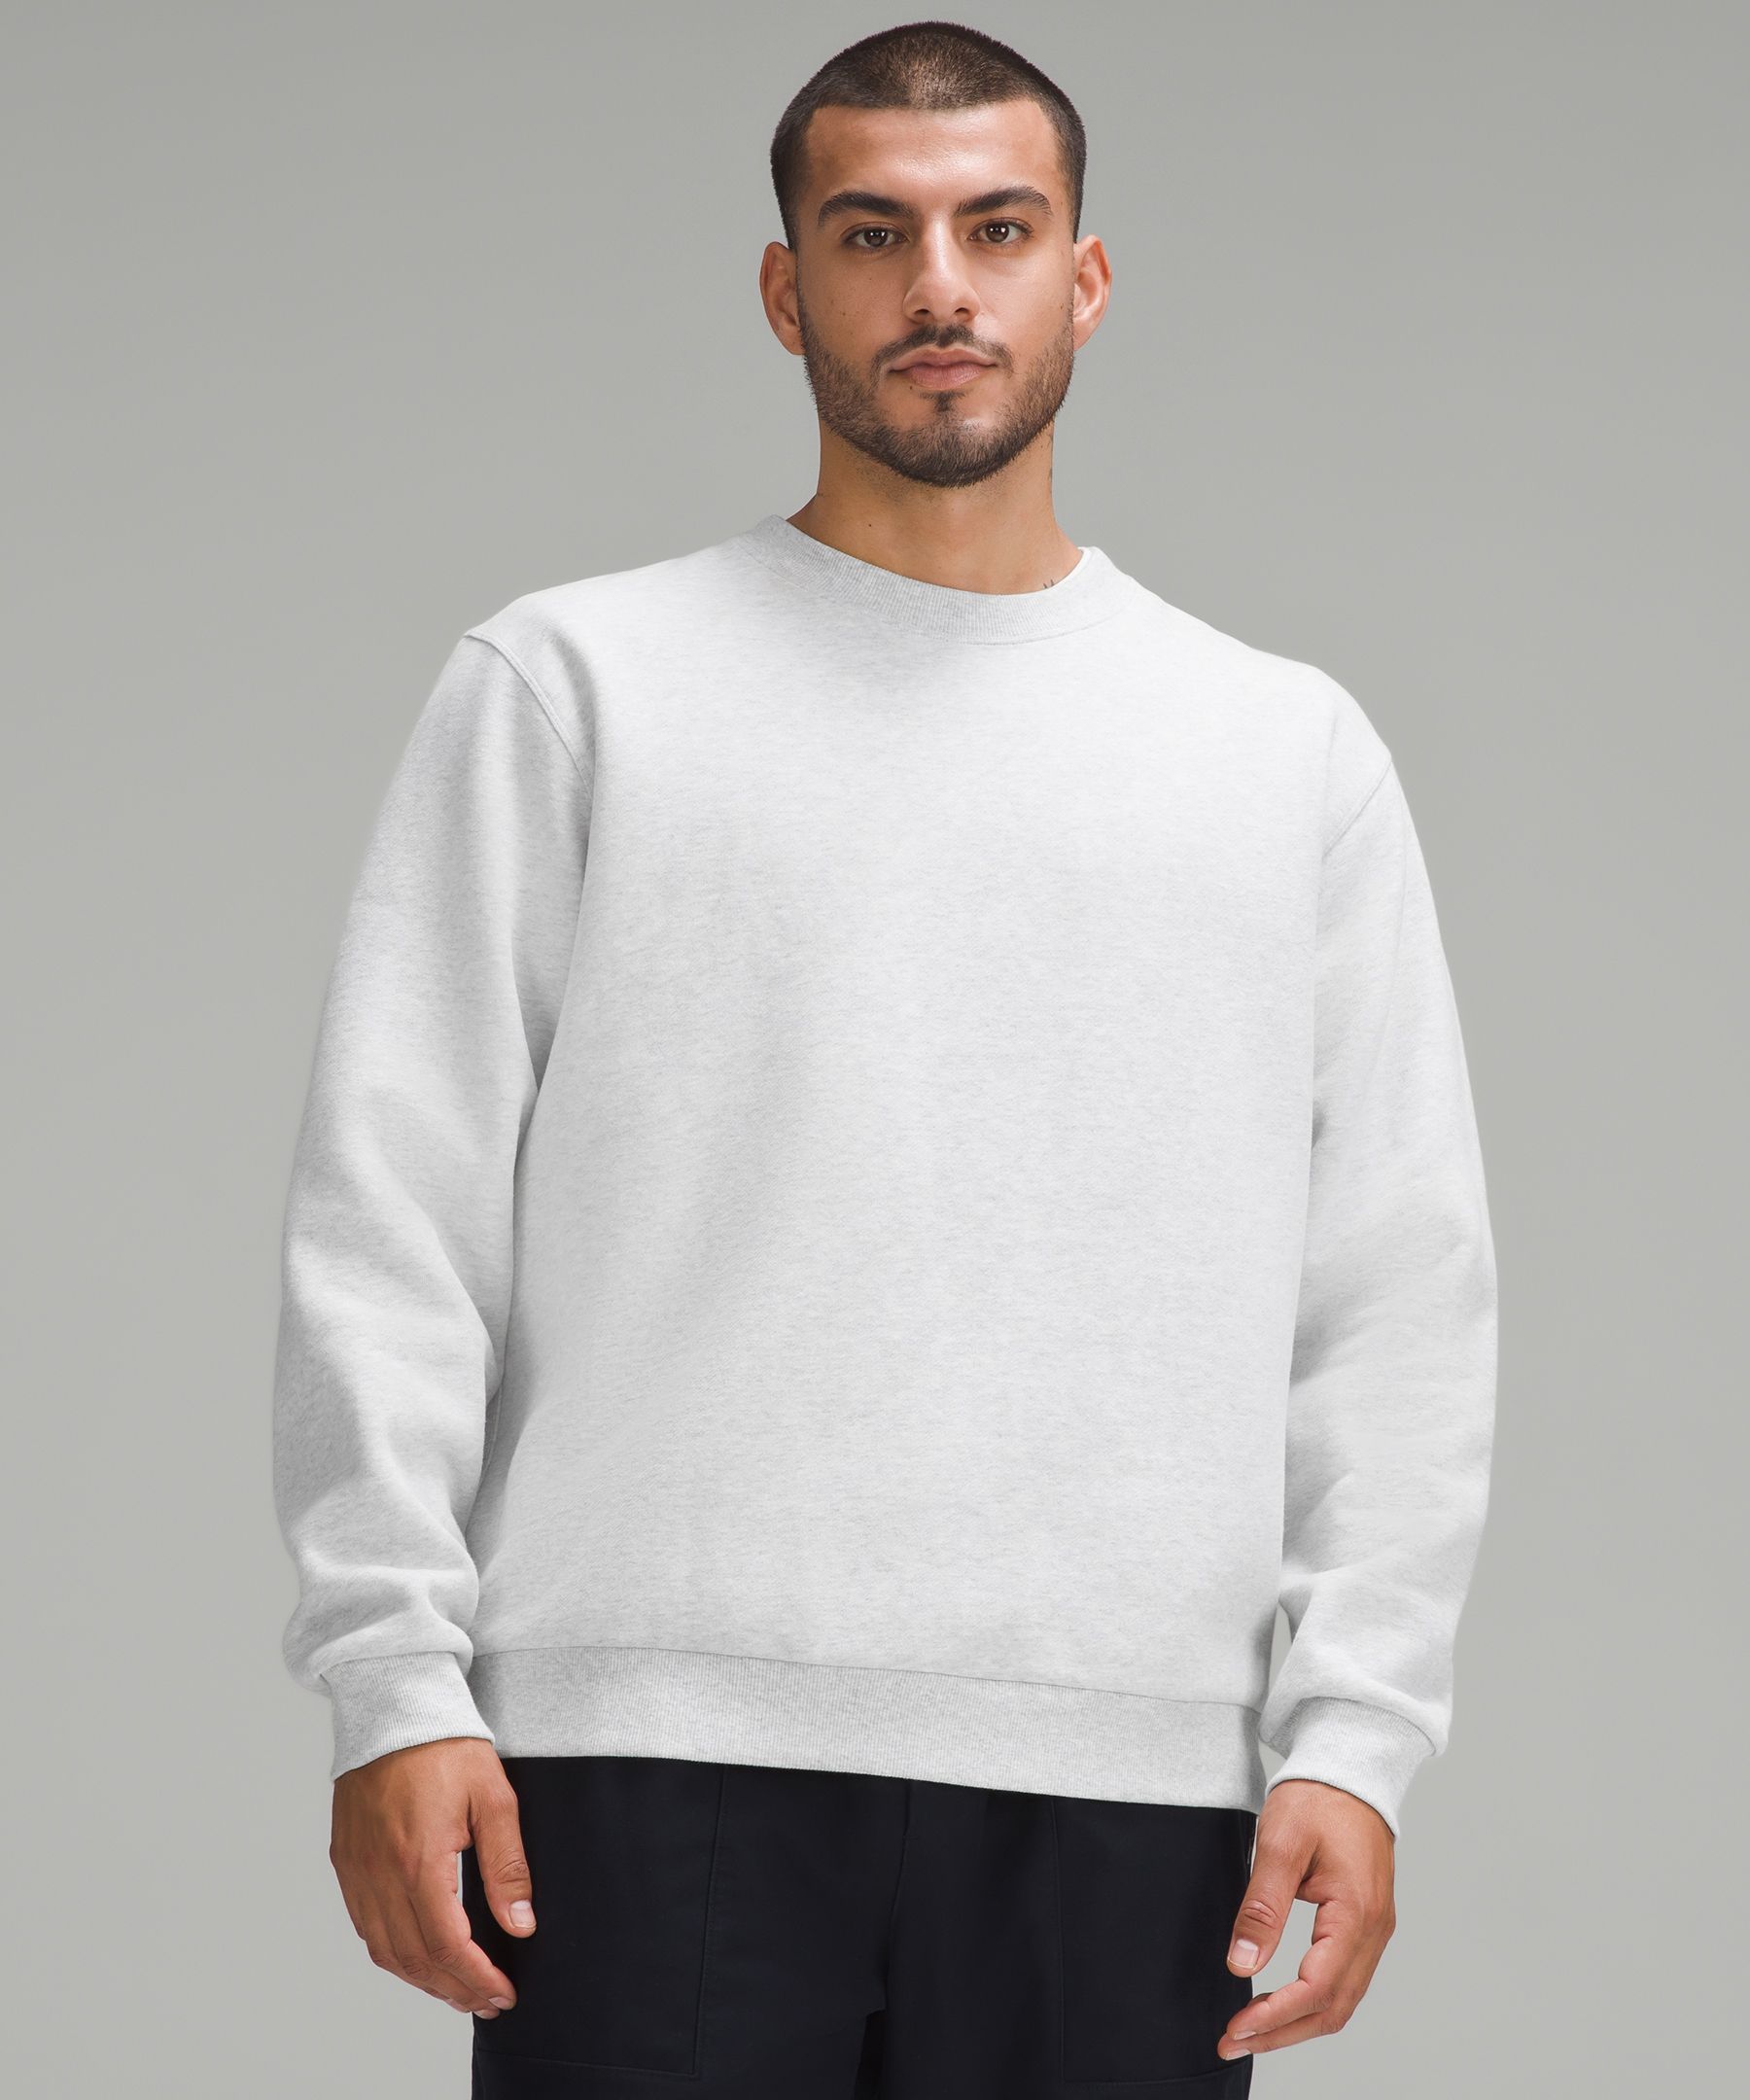 Sweatshirt Lululemon Grey size 6 US in Cotton - 40778932